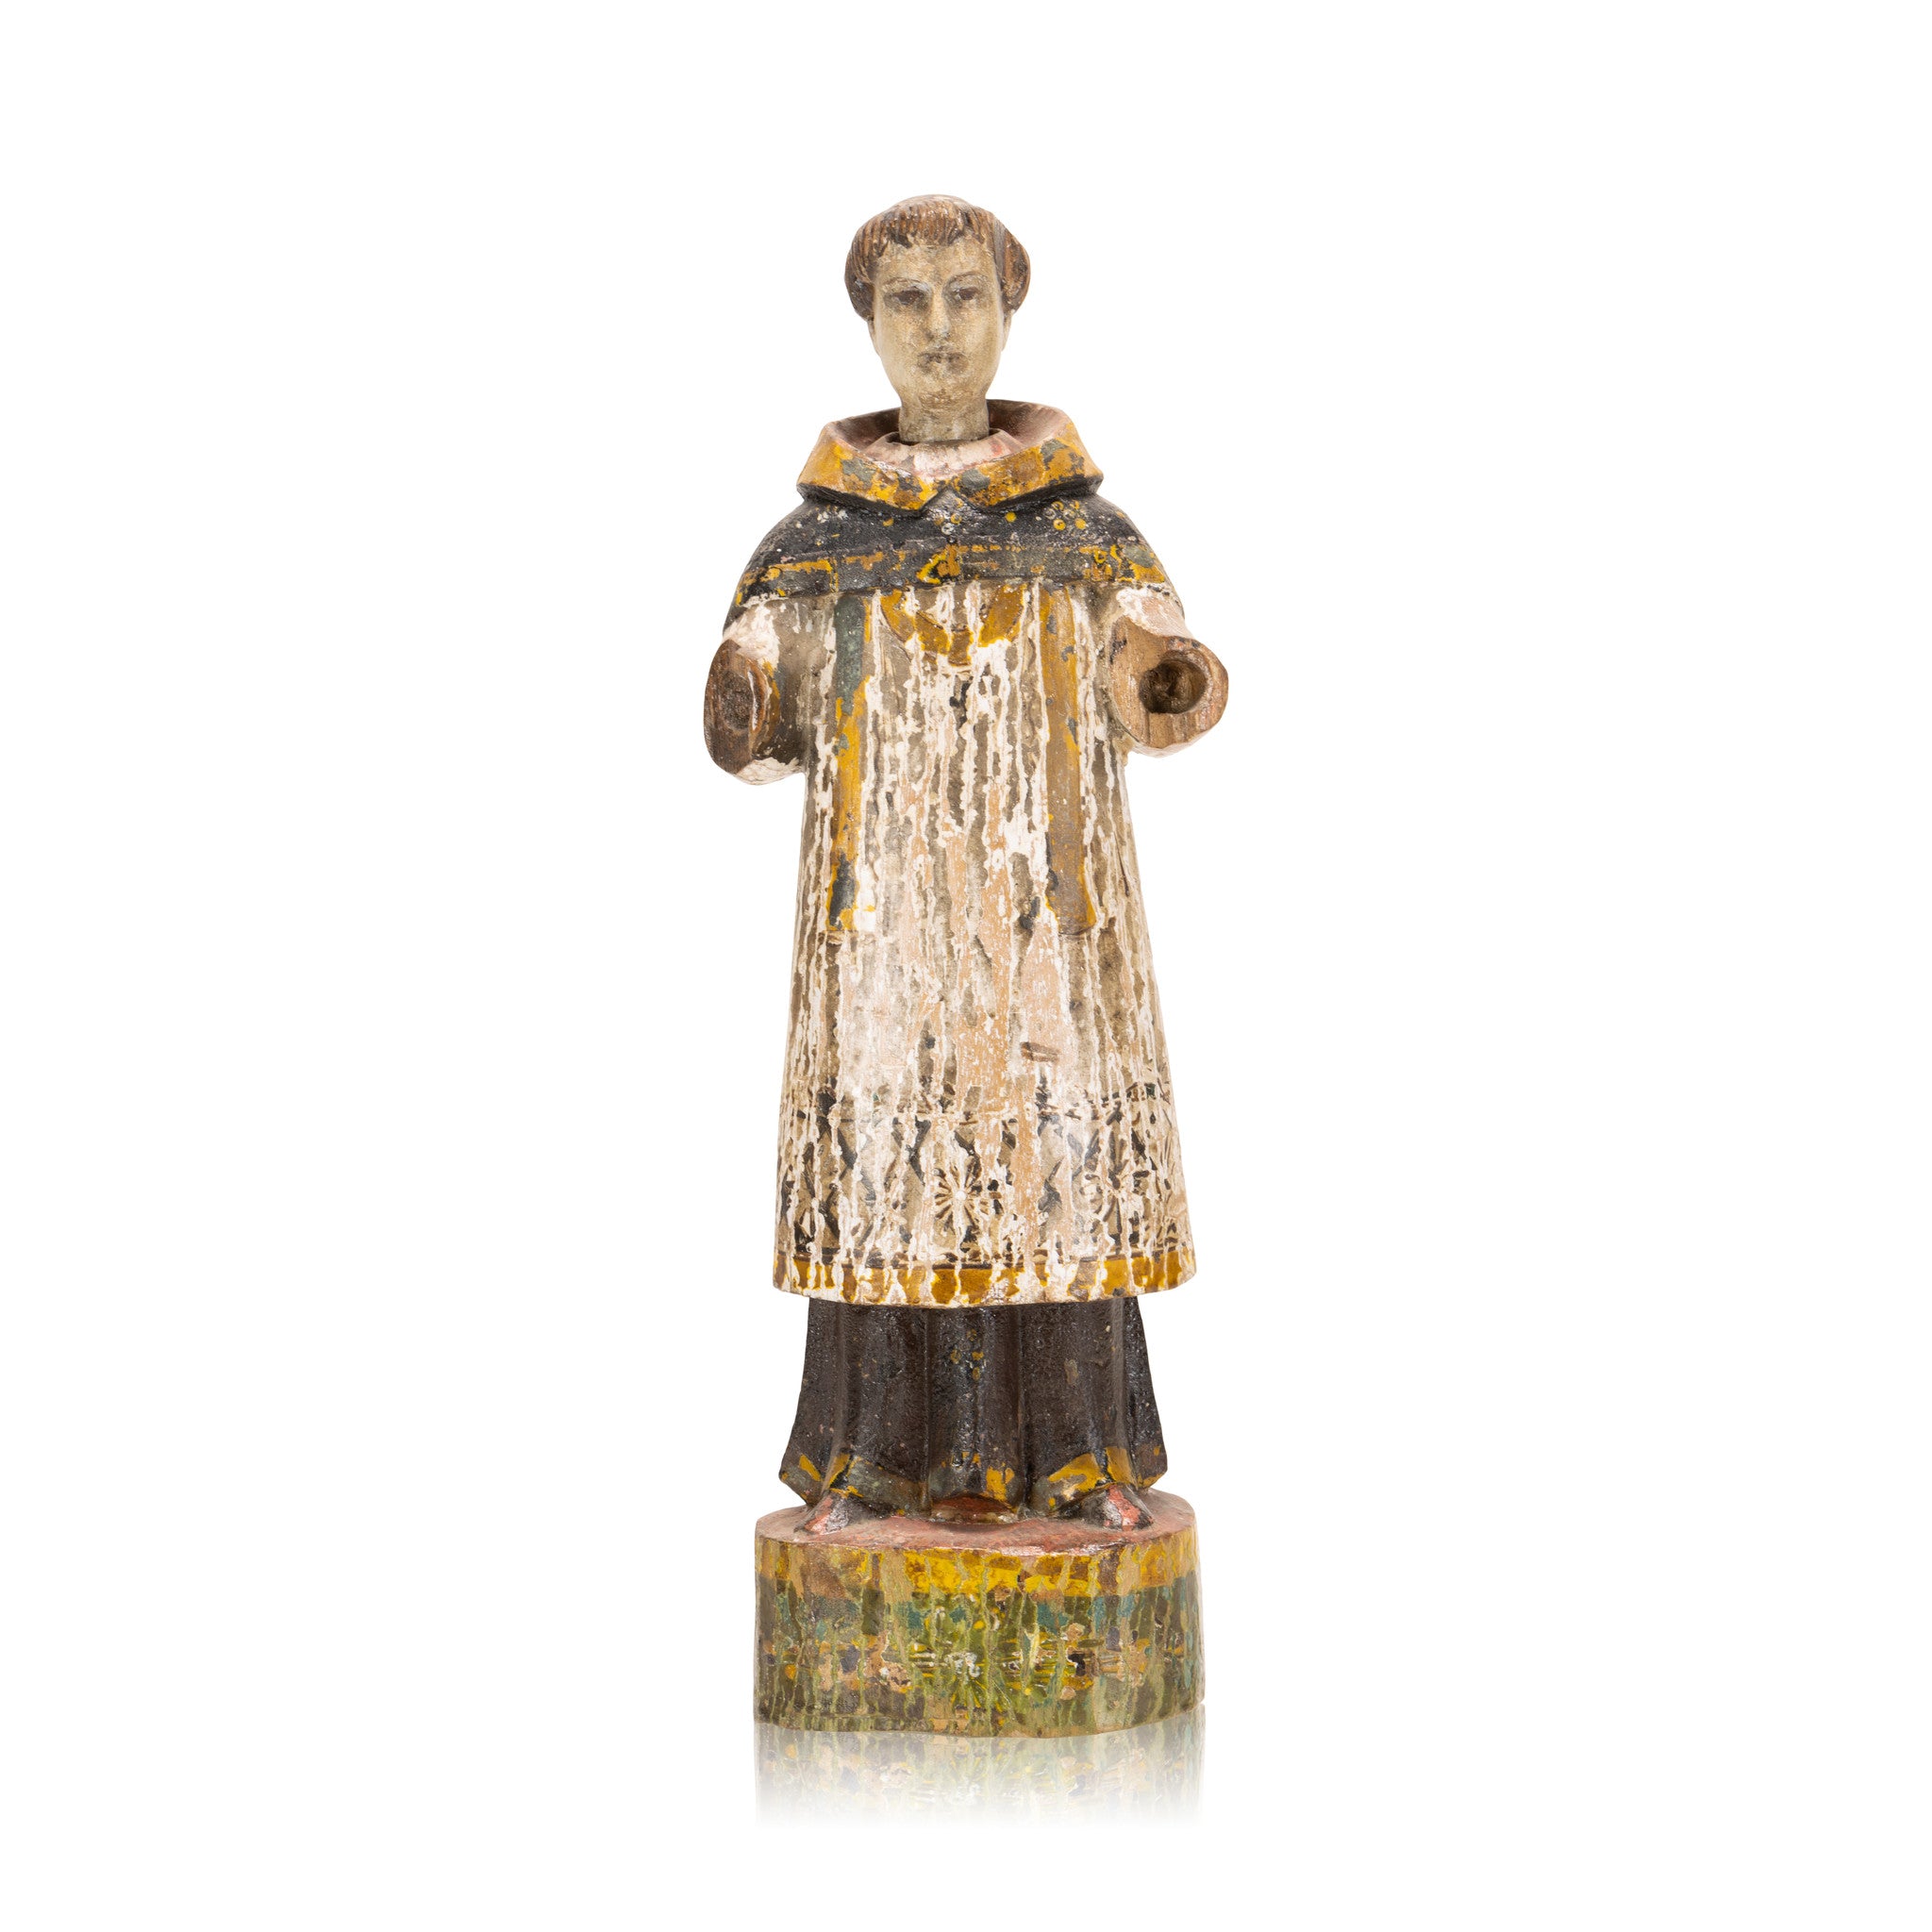 St. Bernadino of Siena Santo, Furnishings, Decor, Religious Item